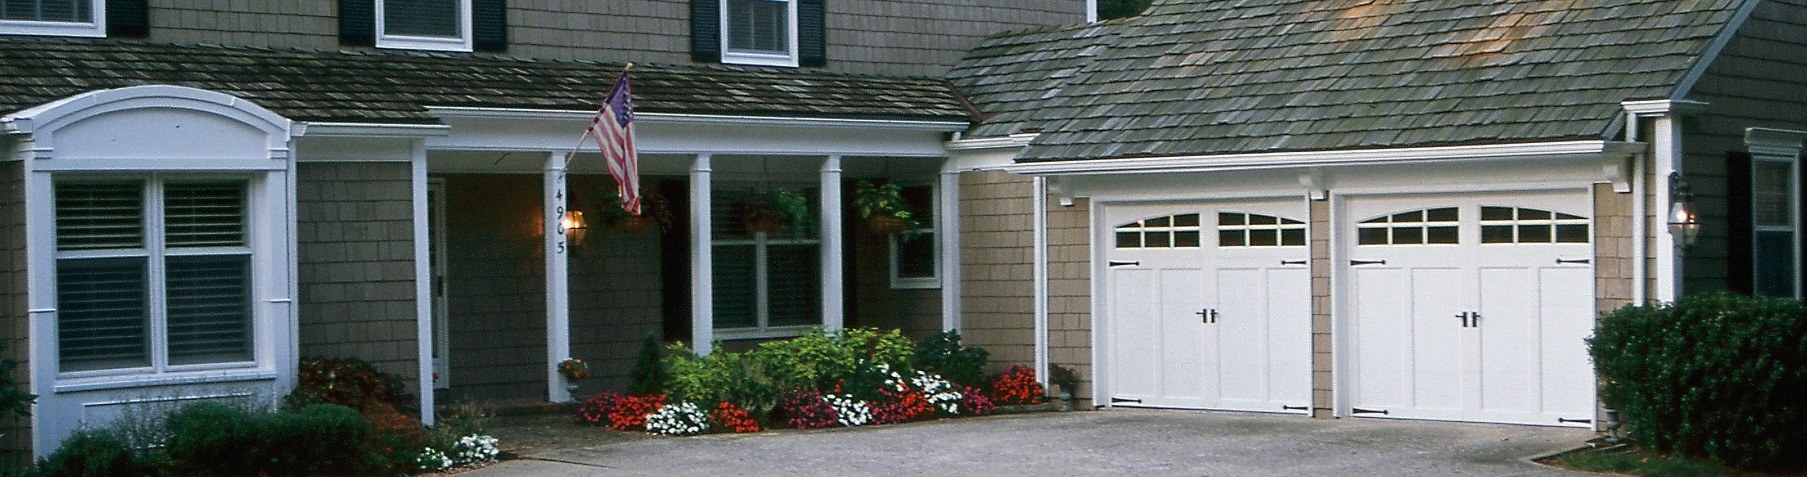 Traditional Garage Door with Arch Windows